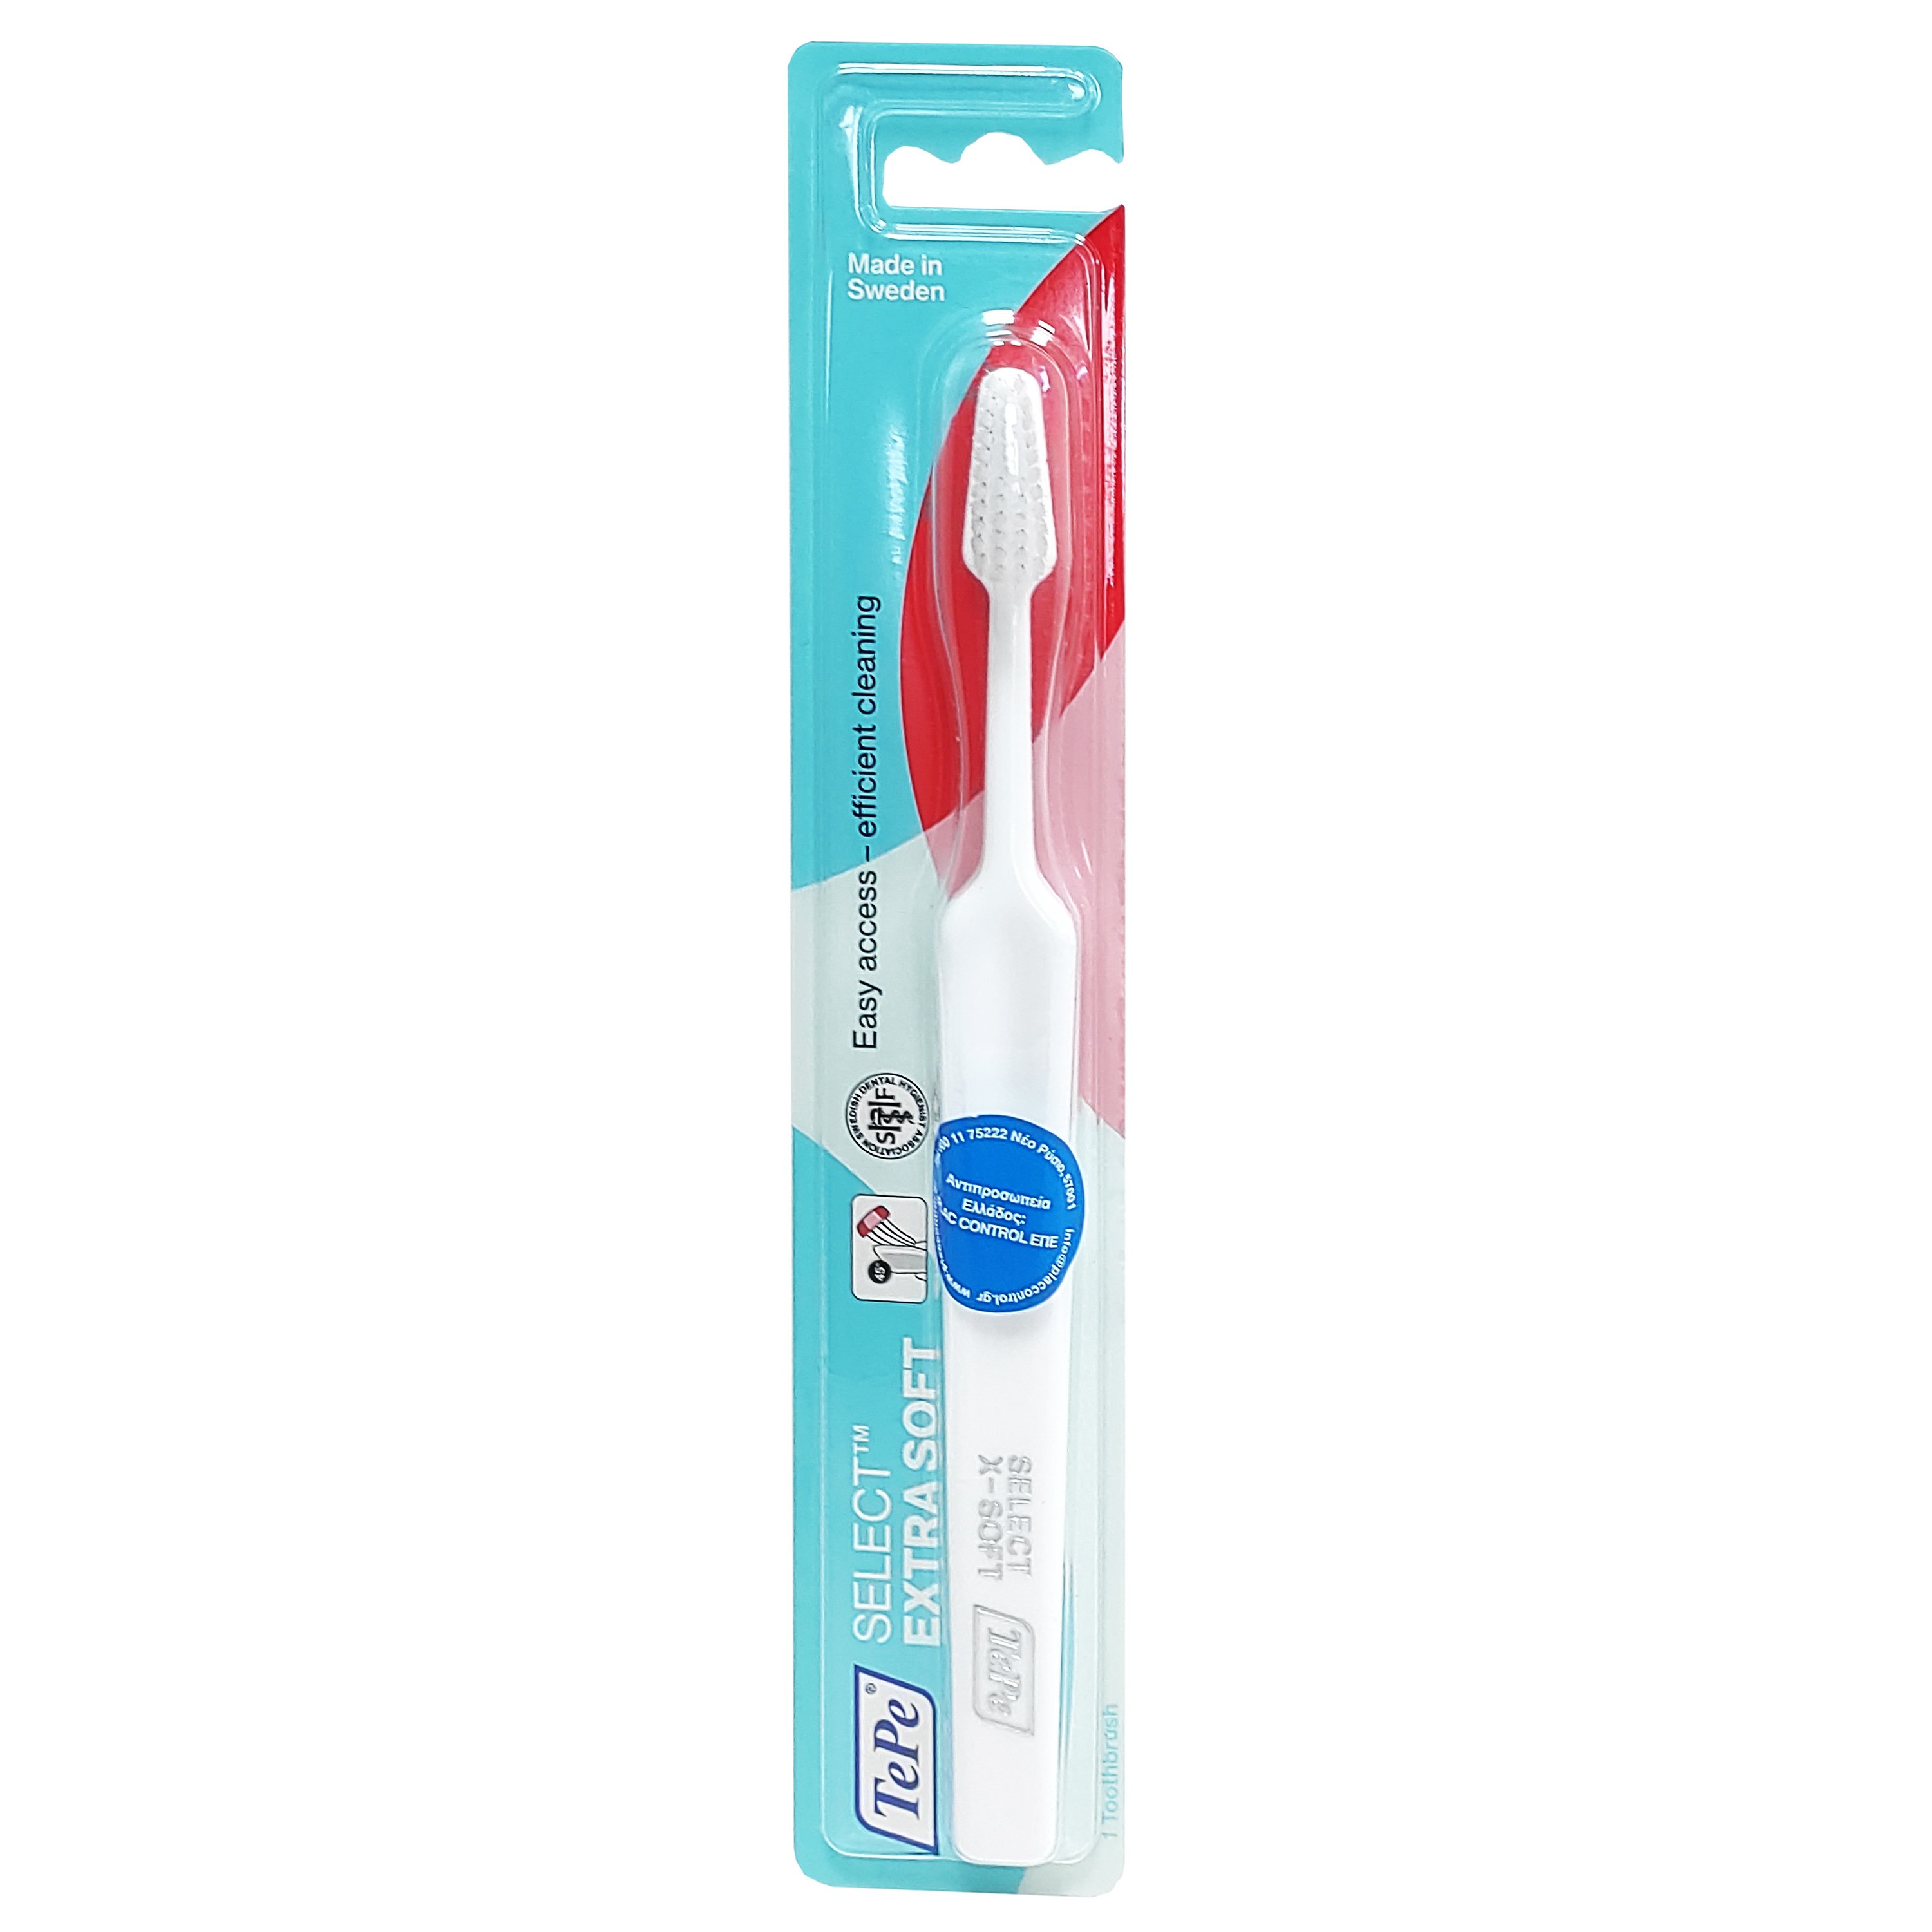 Tepe Select Extra Soft Οδοντόβουρτσα Πολύ Μαλακή για Αποτελεσματικό Καθαρισμό & Προστασία των Ούλων 1 Τεμάχιο – άσπρο